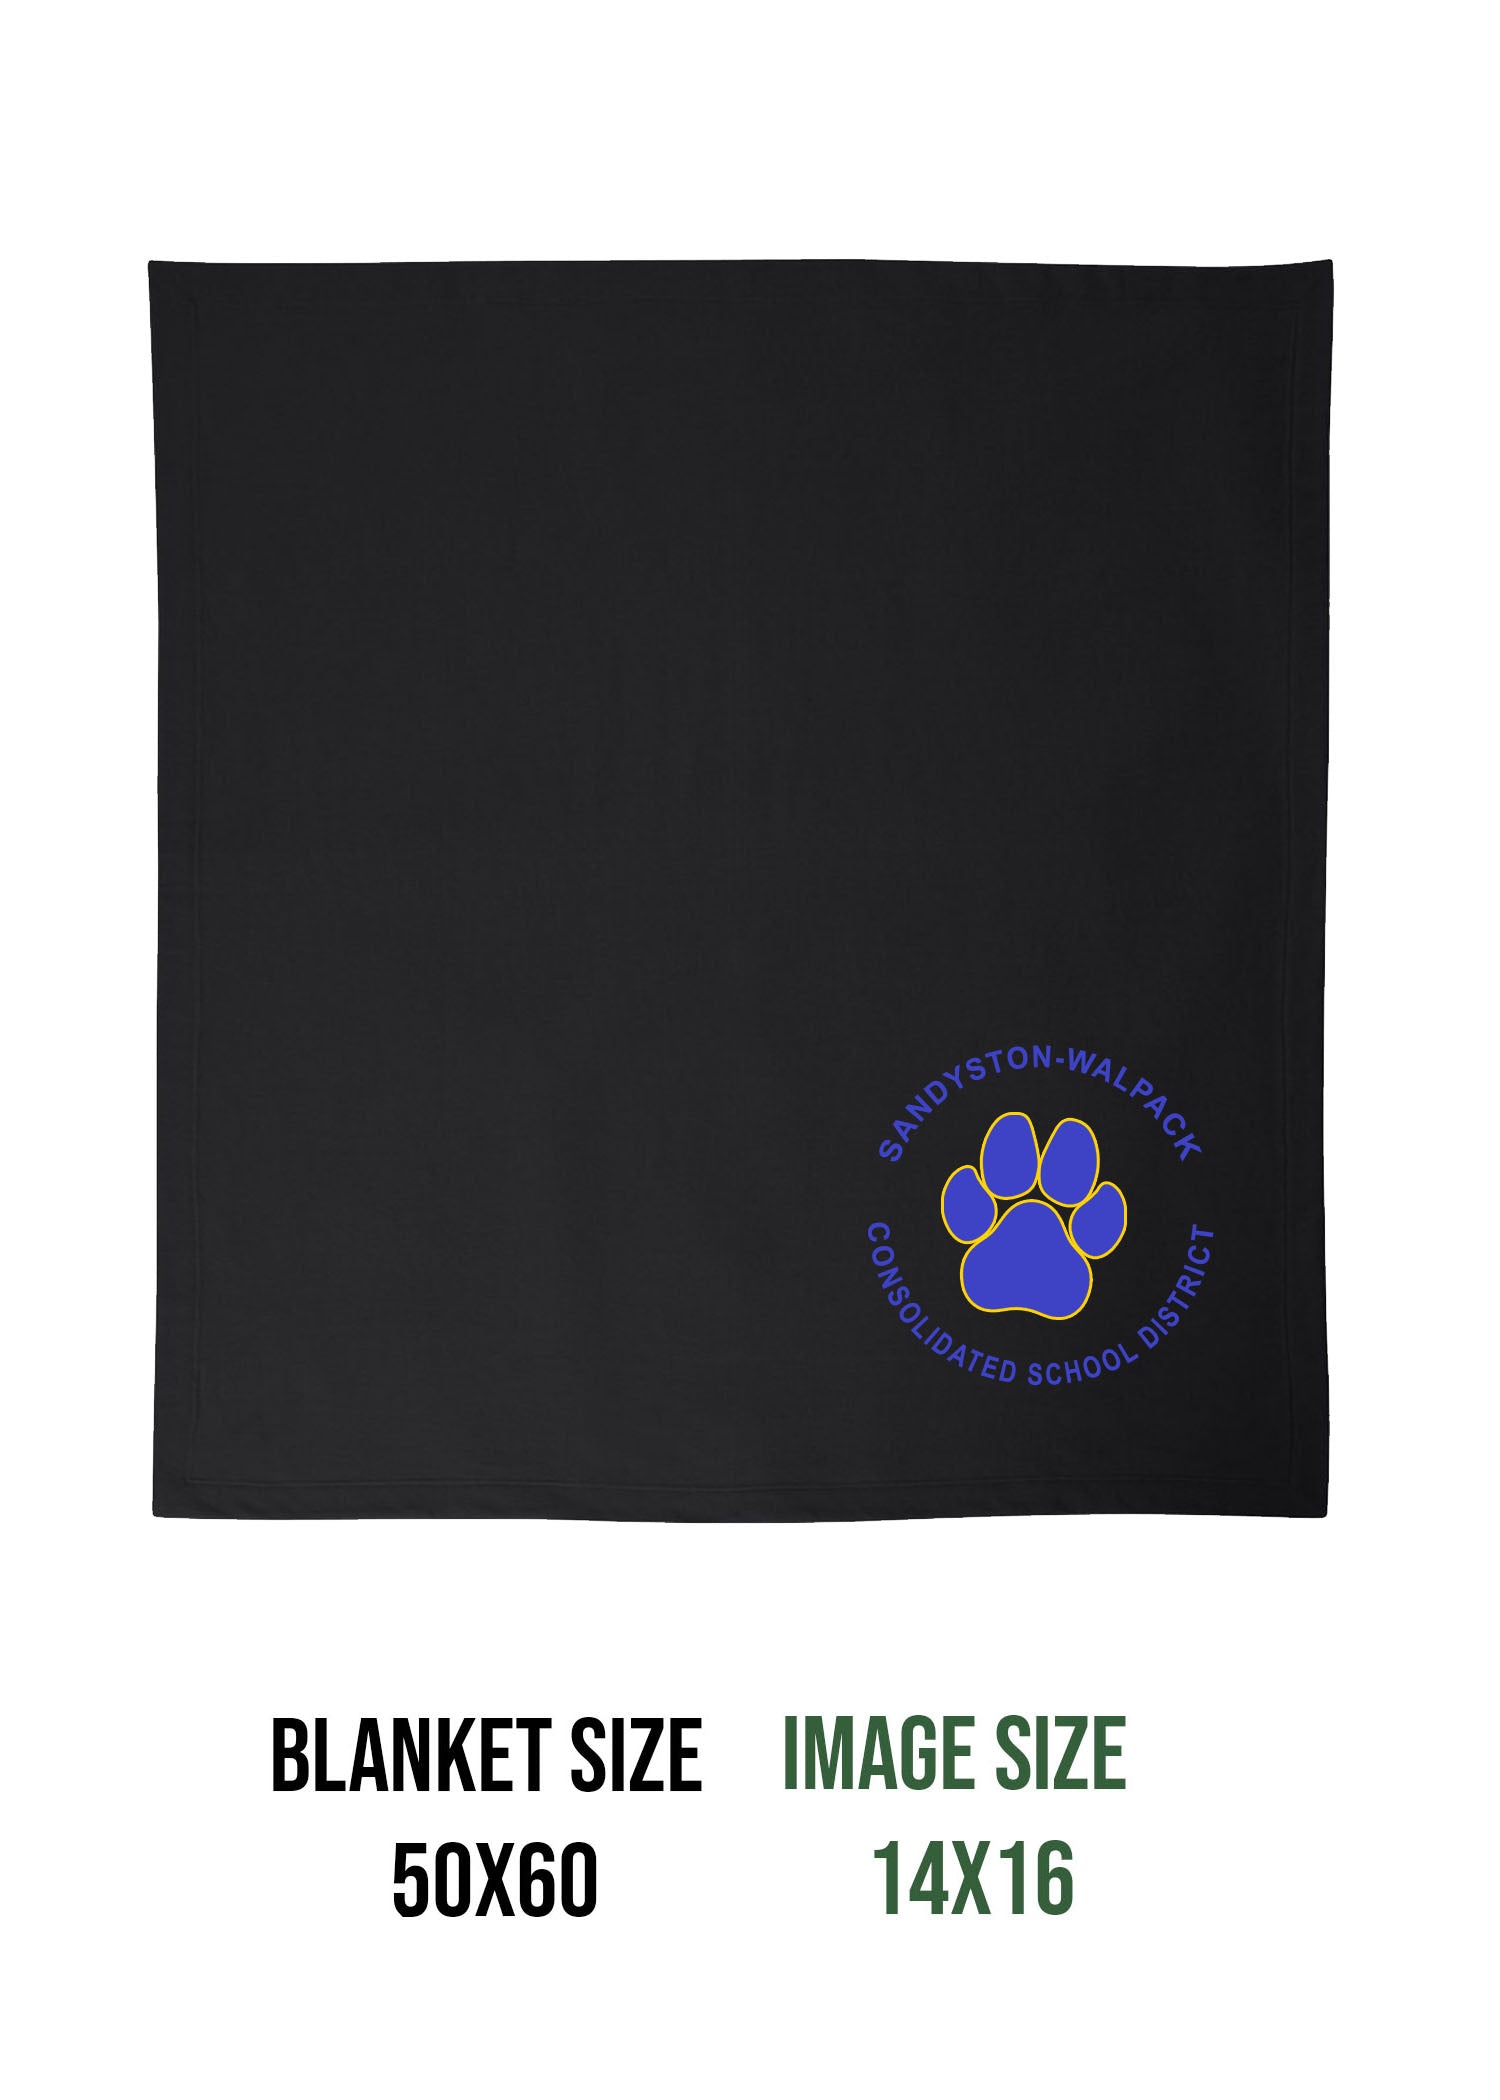 Sandyston Walpack Blanket